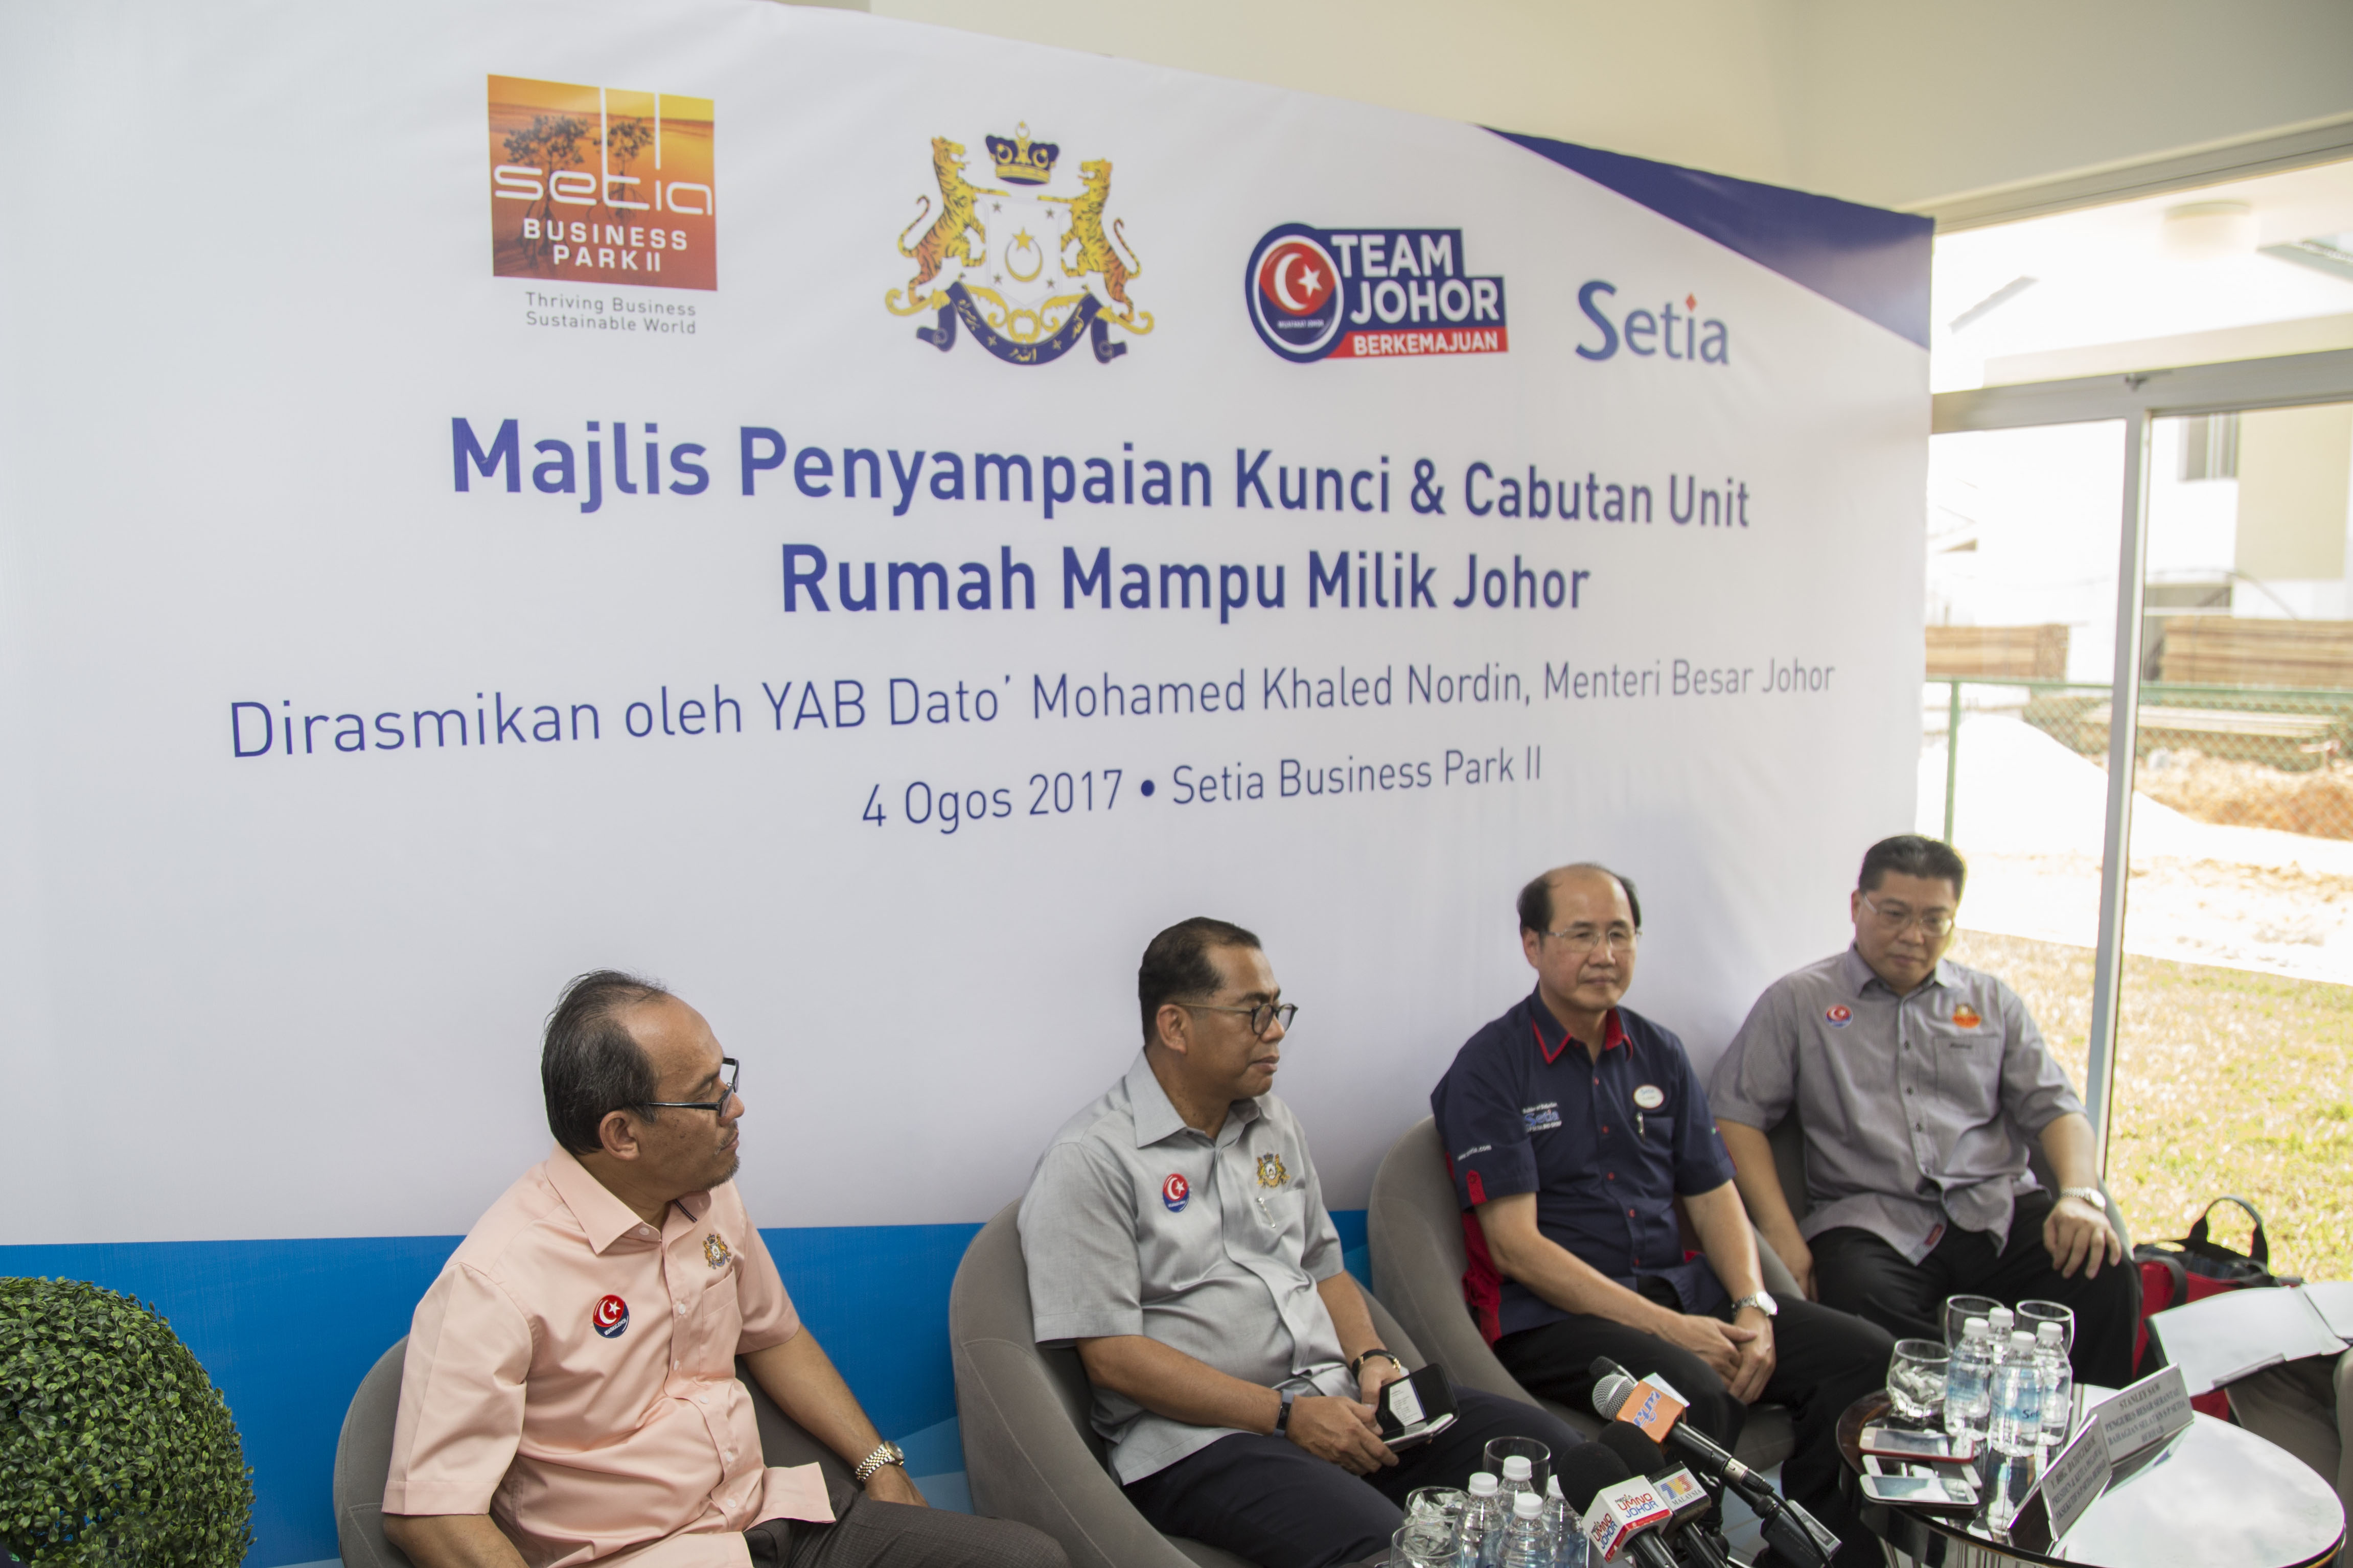 S P Setia delivers Rumah Mampu Milik Johor at Setia 